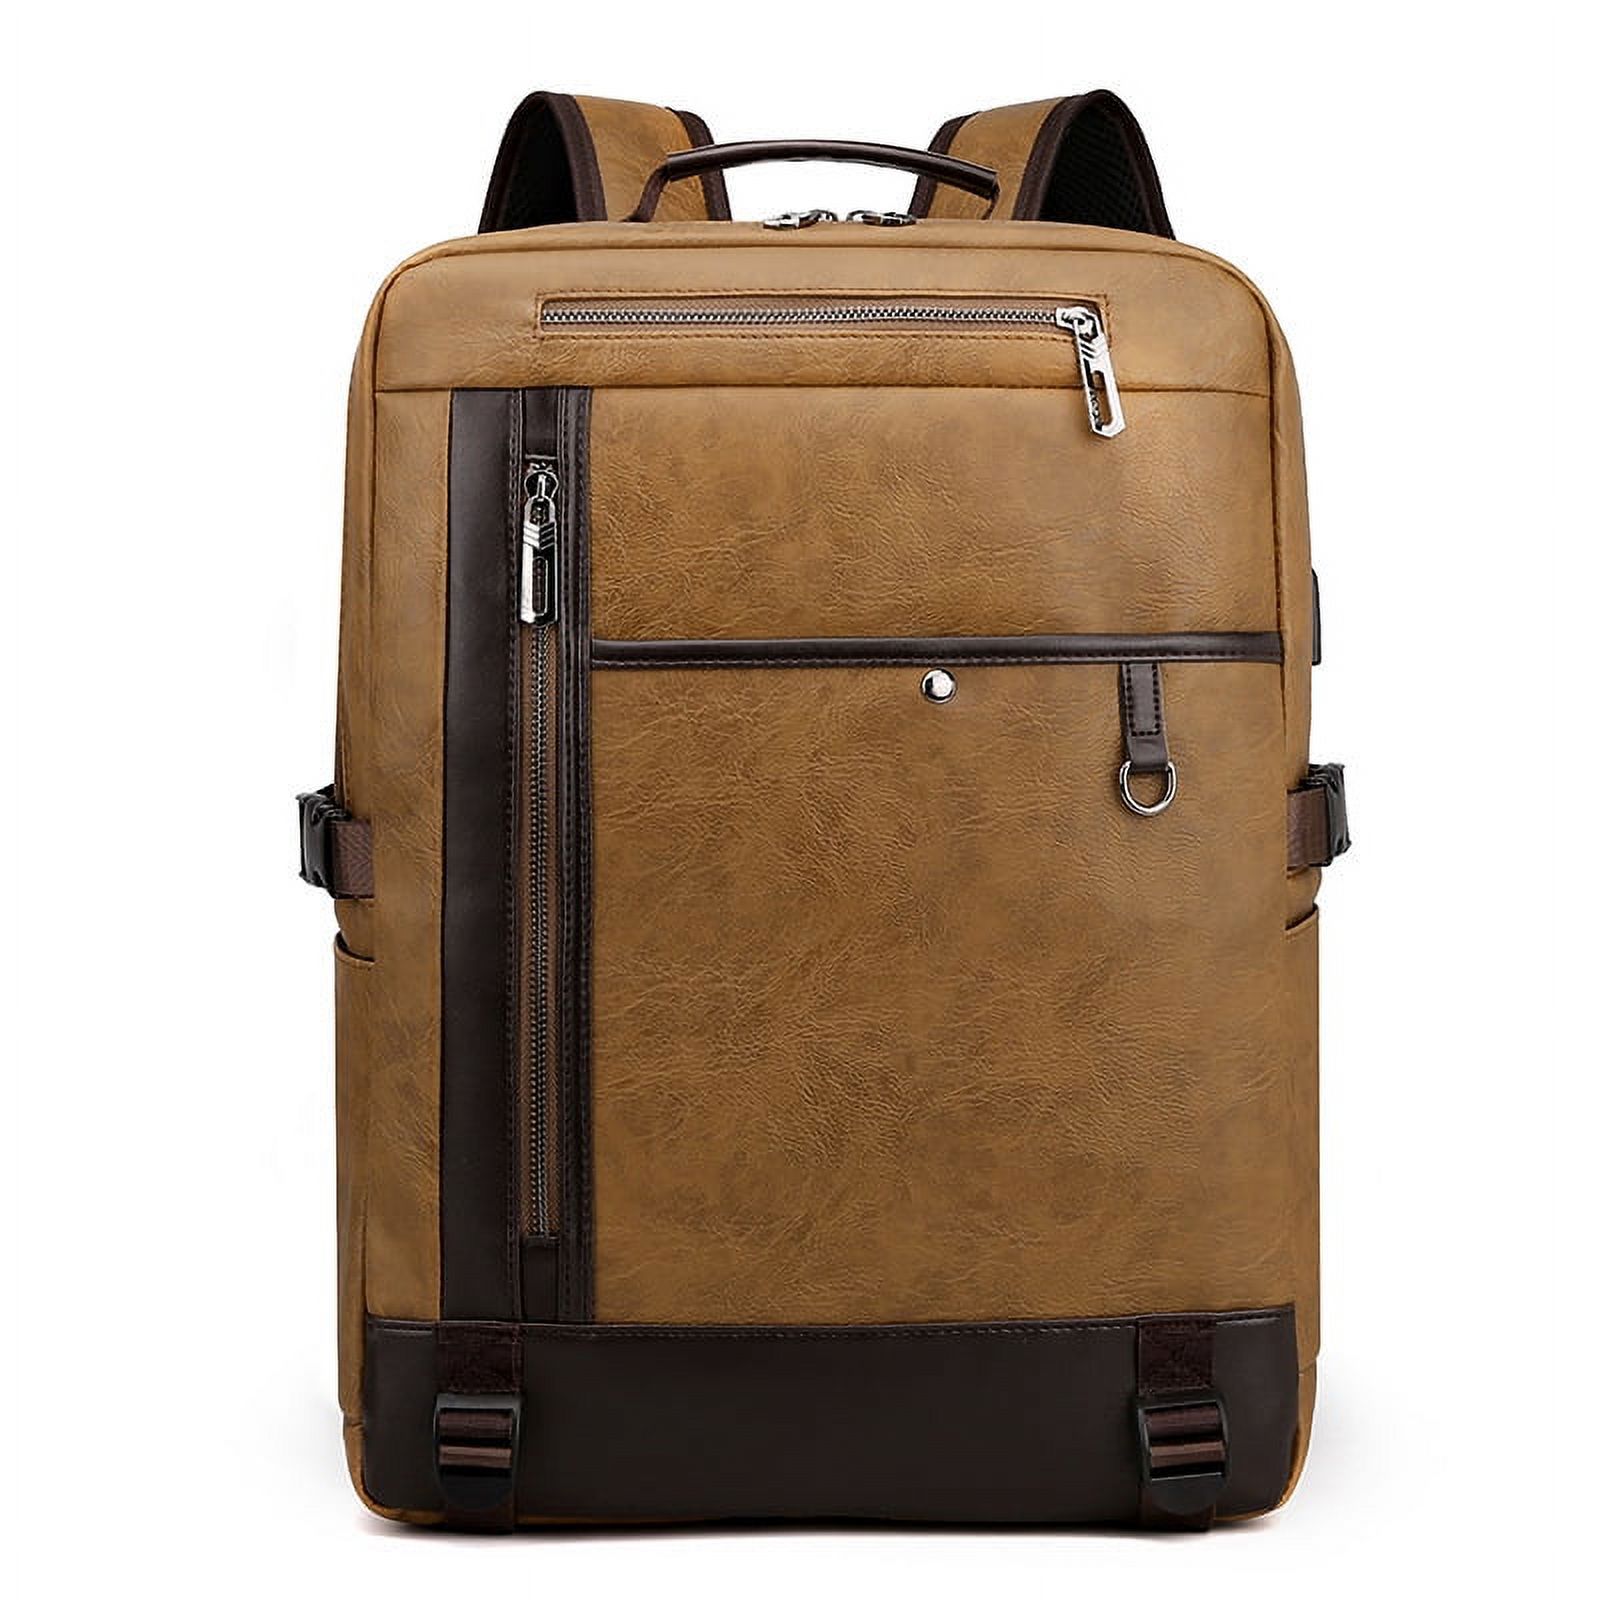 Toyella Summer New Trend Backpack Men's Business Travel Backpack Fashion Computer Bag Khaki - image 1 of 5